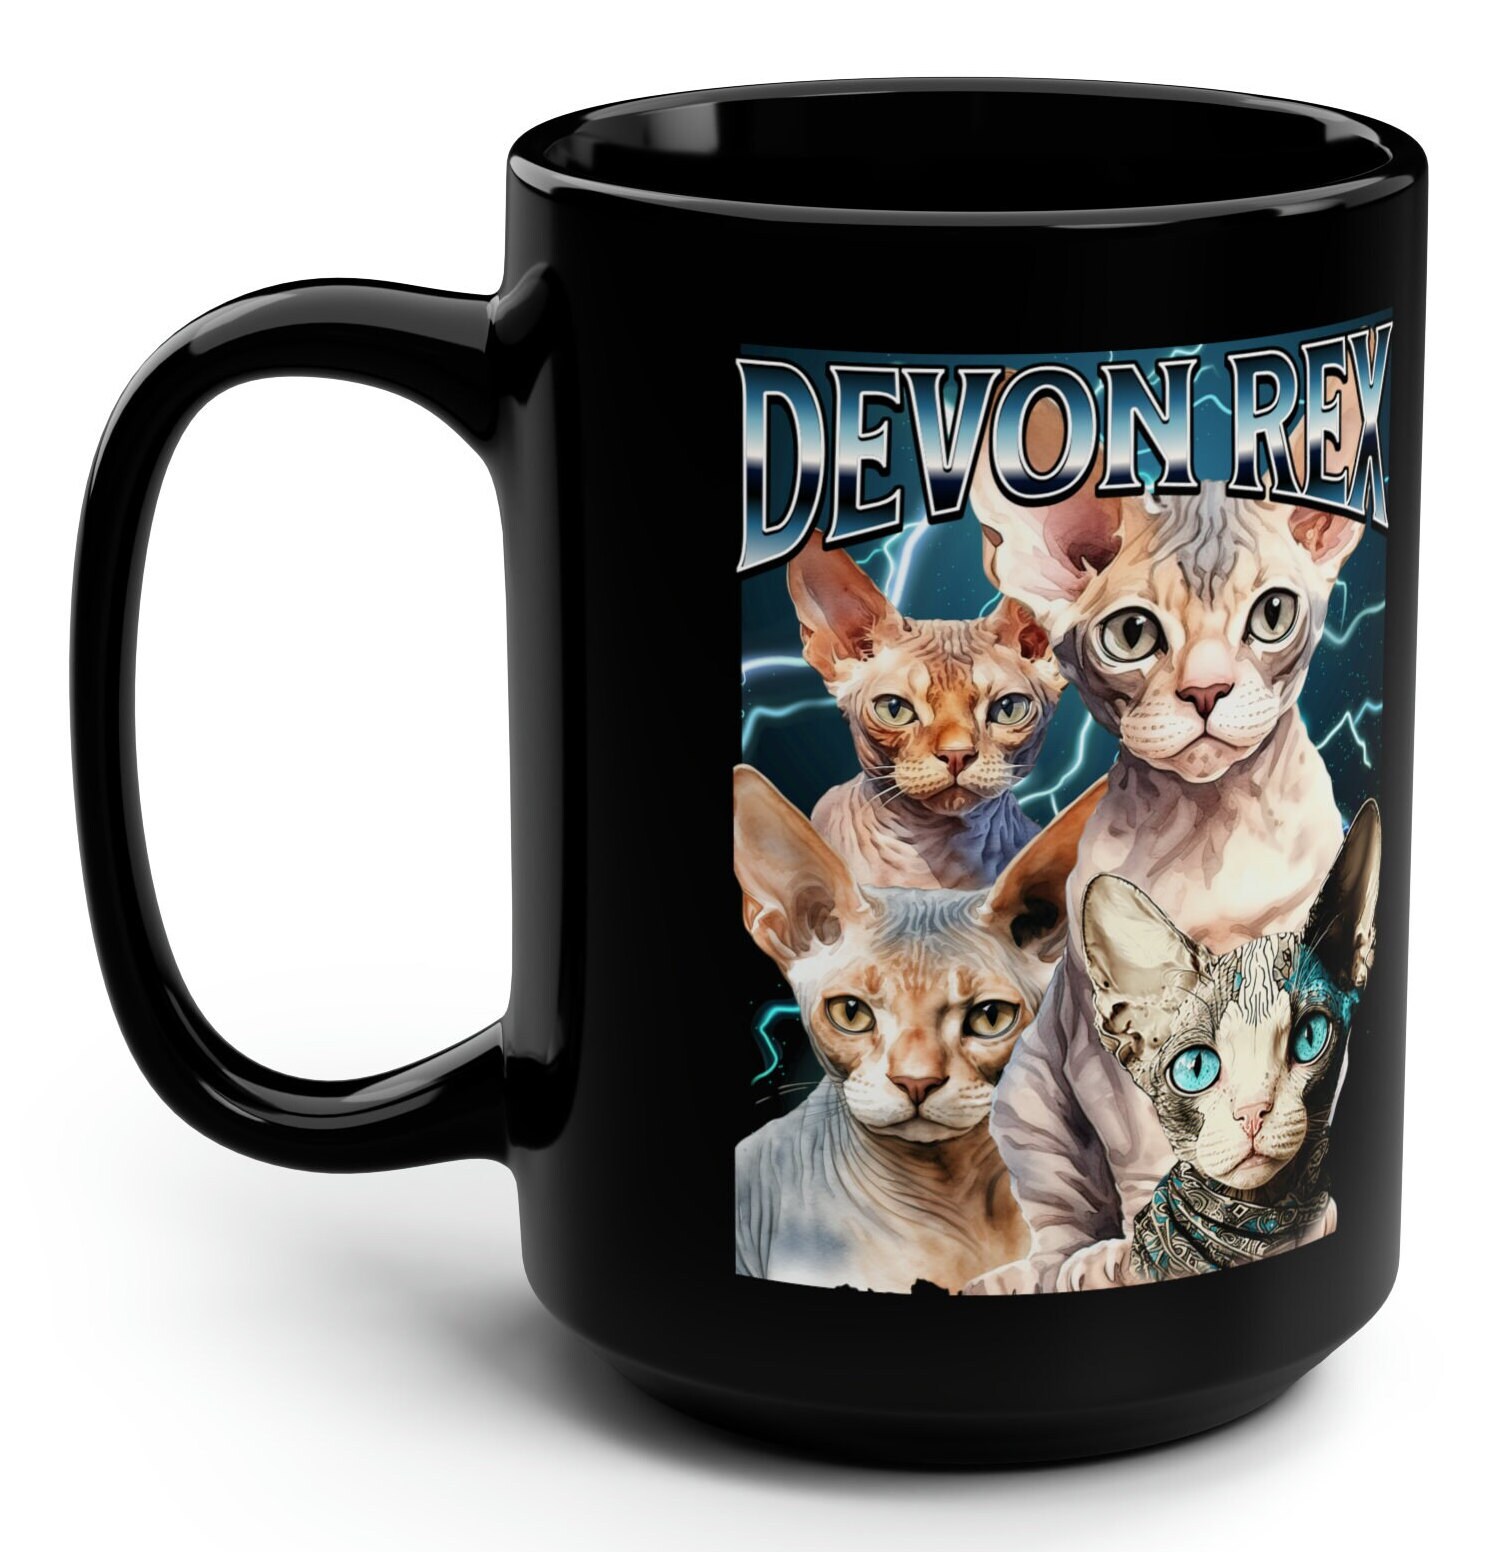 Devon Rex Cat Vintage Graphic Black Mug, Bootleg Retro Funny 90s Mug